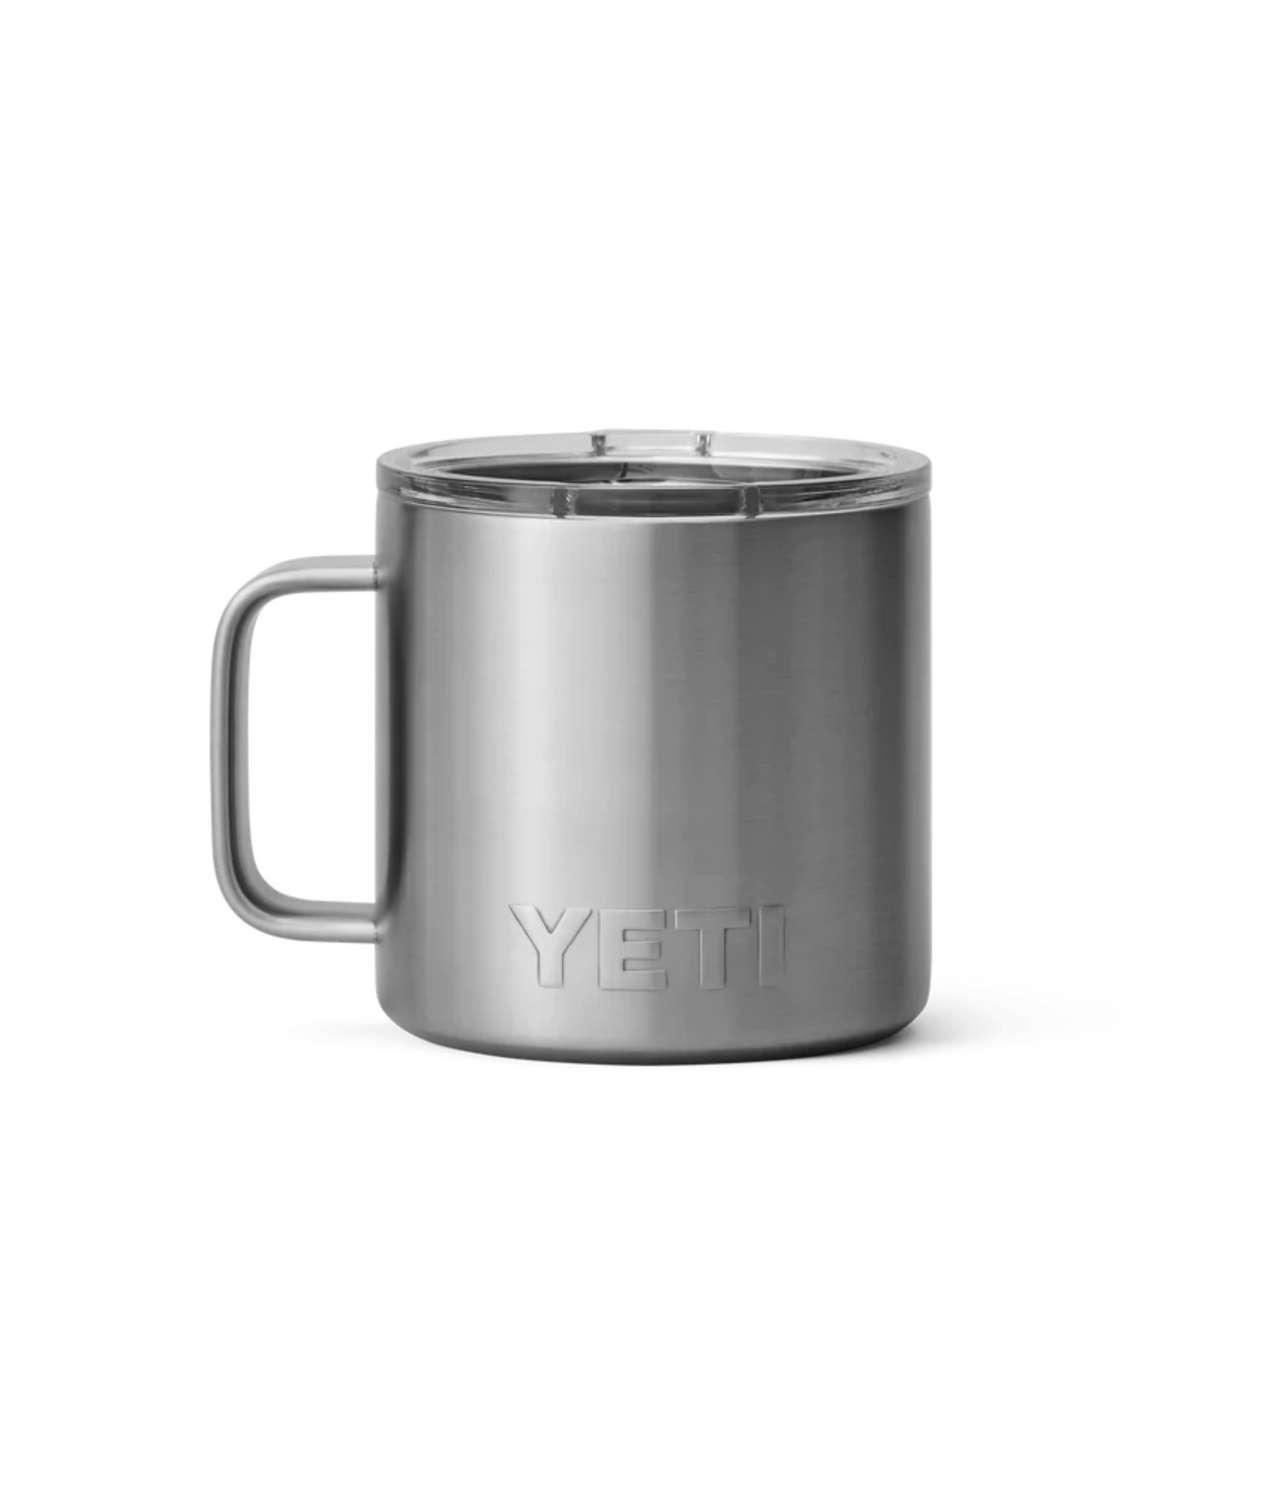 YETI® Rambler Stackable Cup - 8 oz.